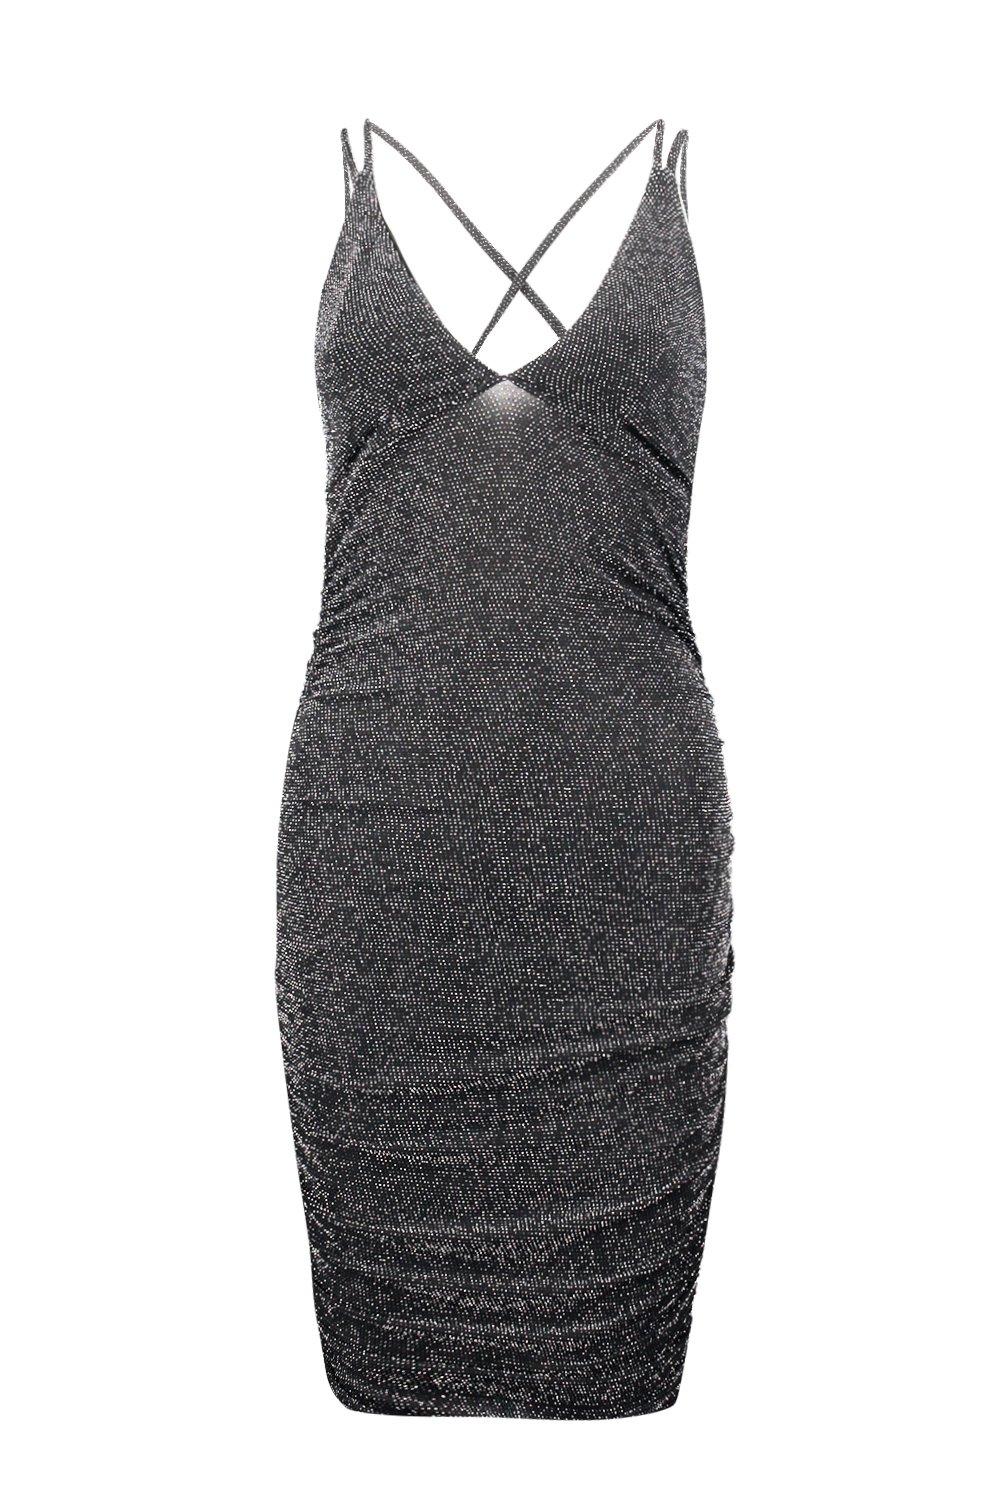 Boohoo Womens Alecta Metallic Strappy Bodycon Dress | eBay